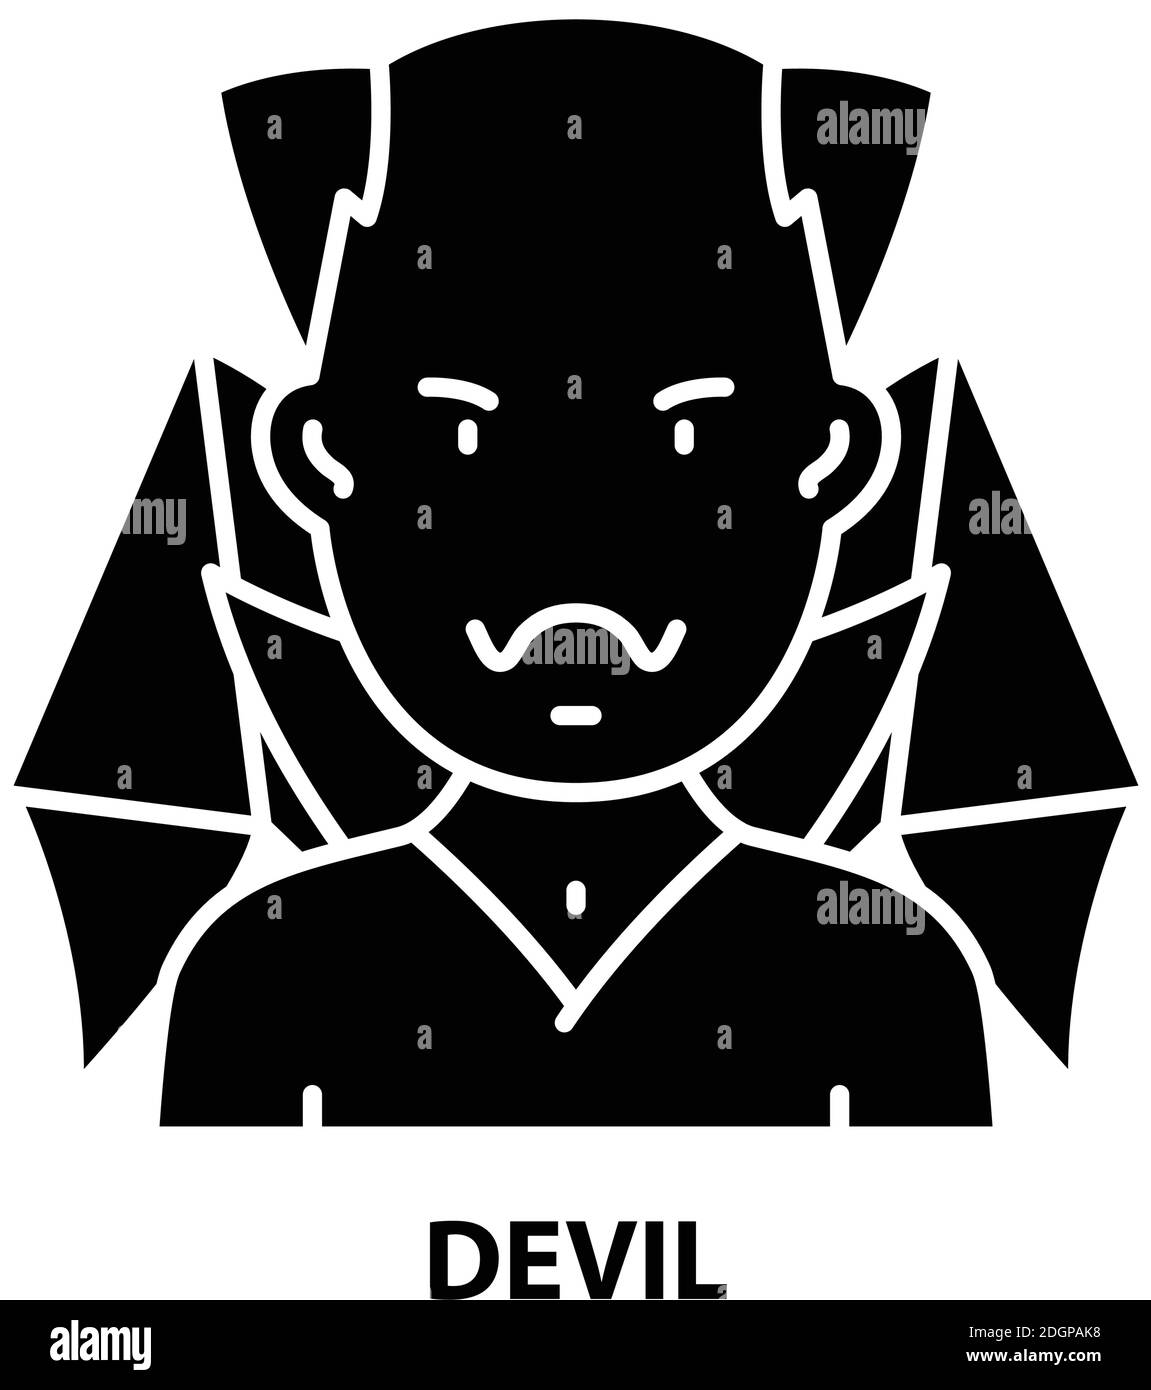 devil icon, black vector sign with editable strokes, concept illustration Stock Vector